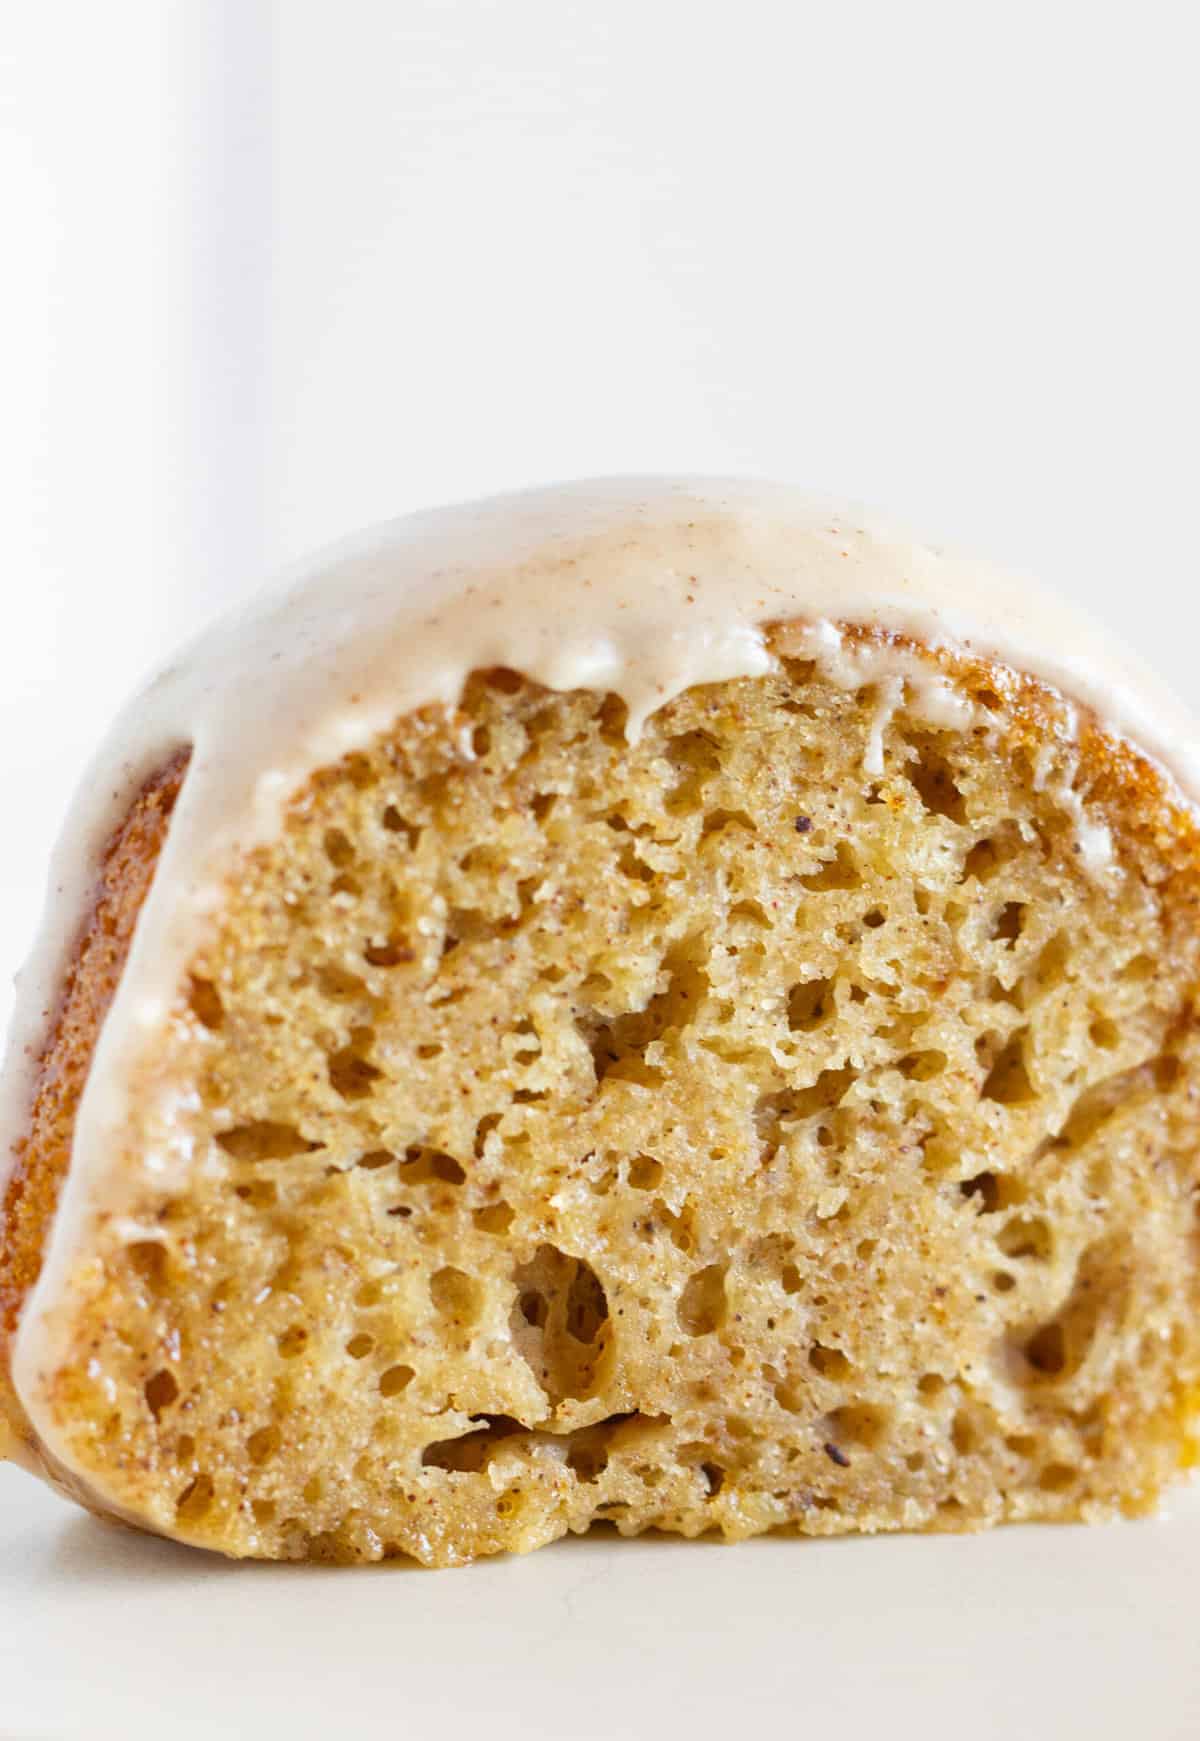 A slice of Spice Bundt Cake with maple glaze on a plate and ready to serve.